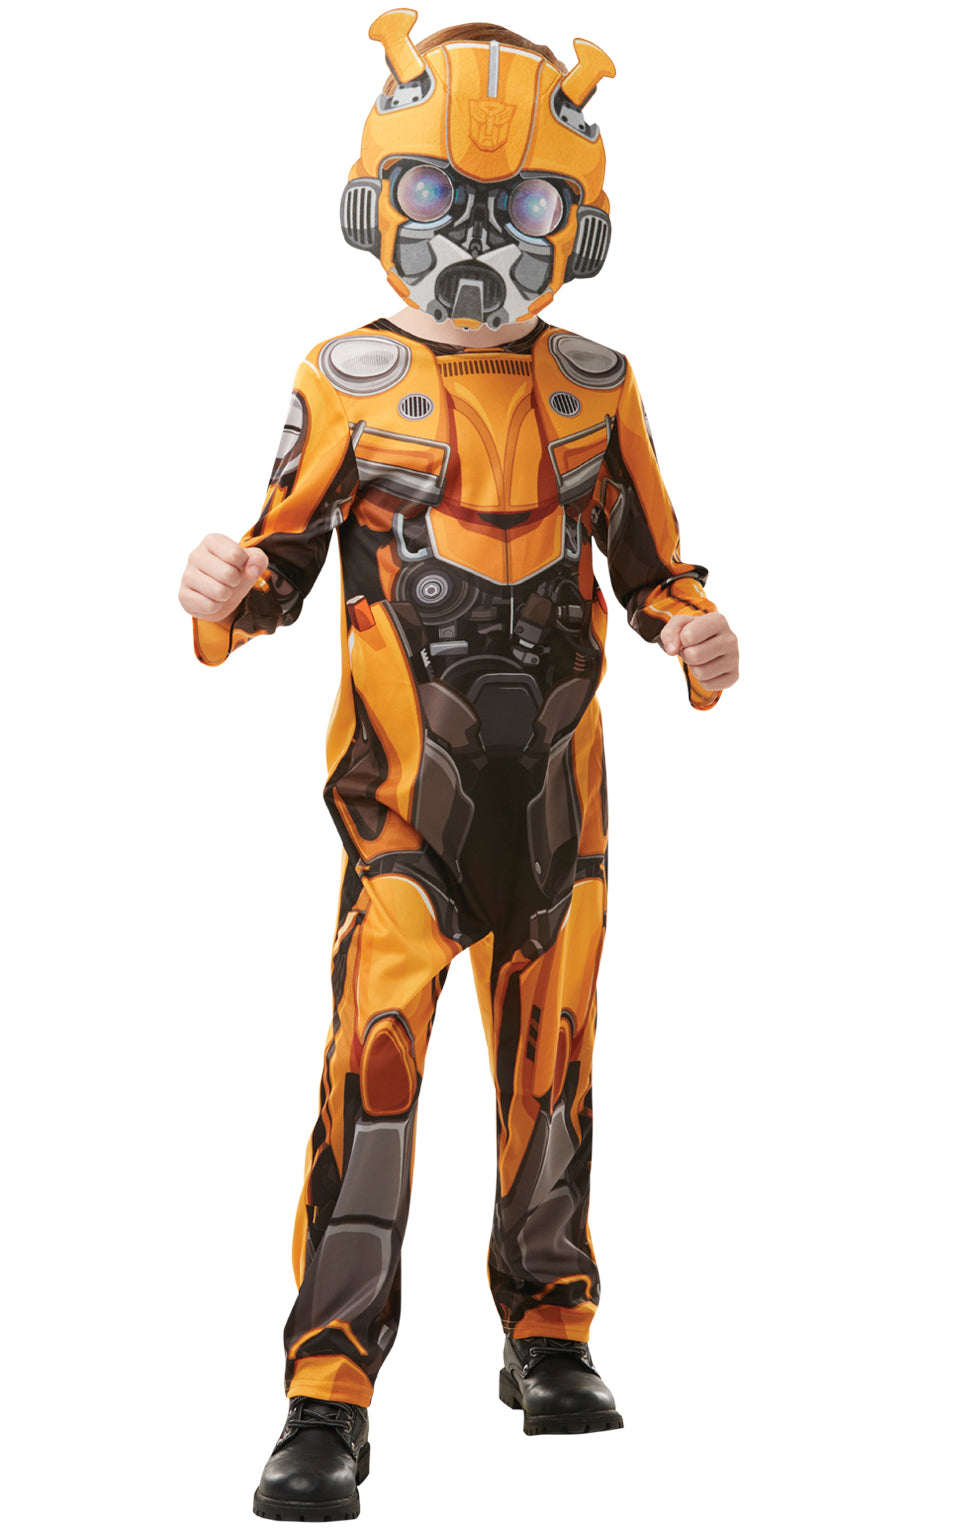 Boys Bumblebee Transformer Movie Robot Costume